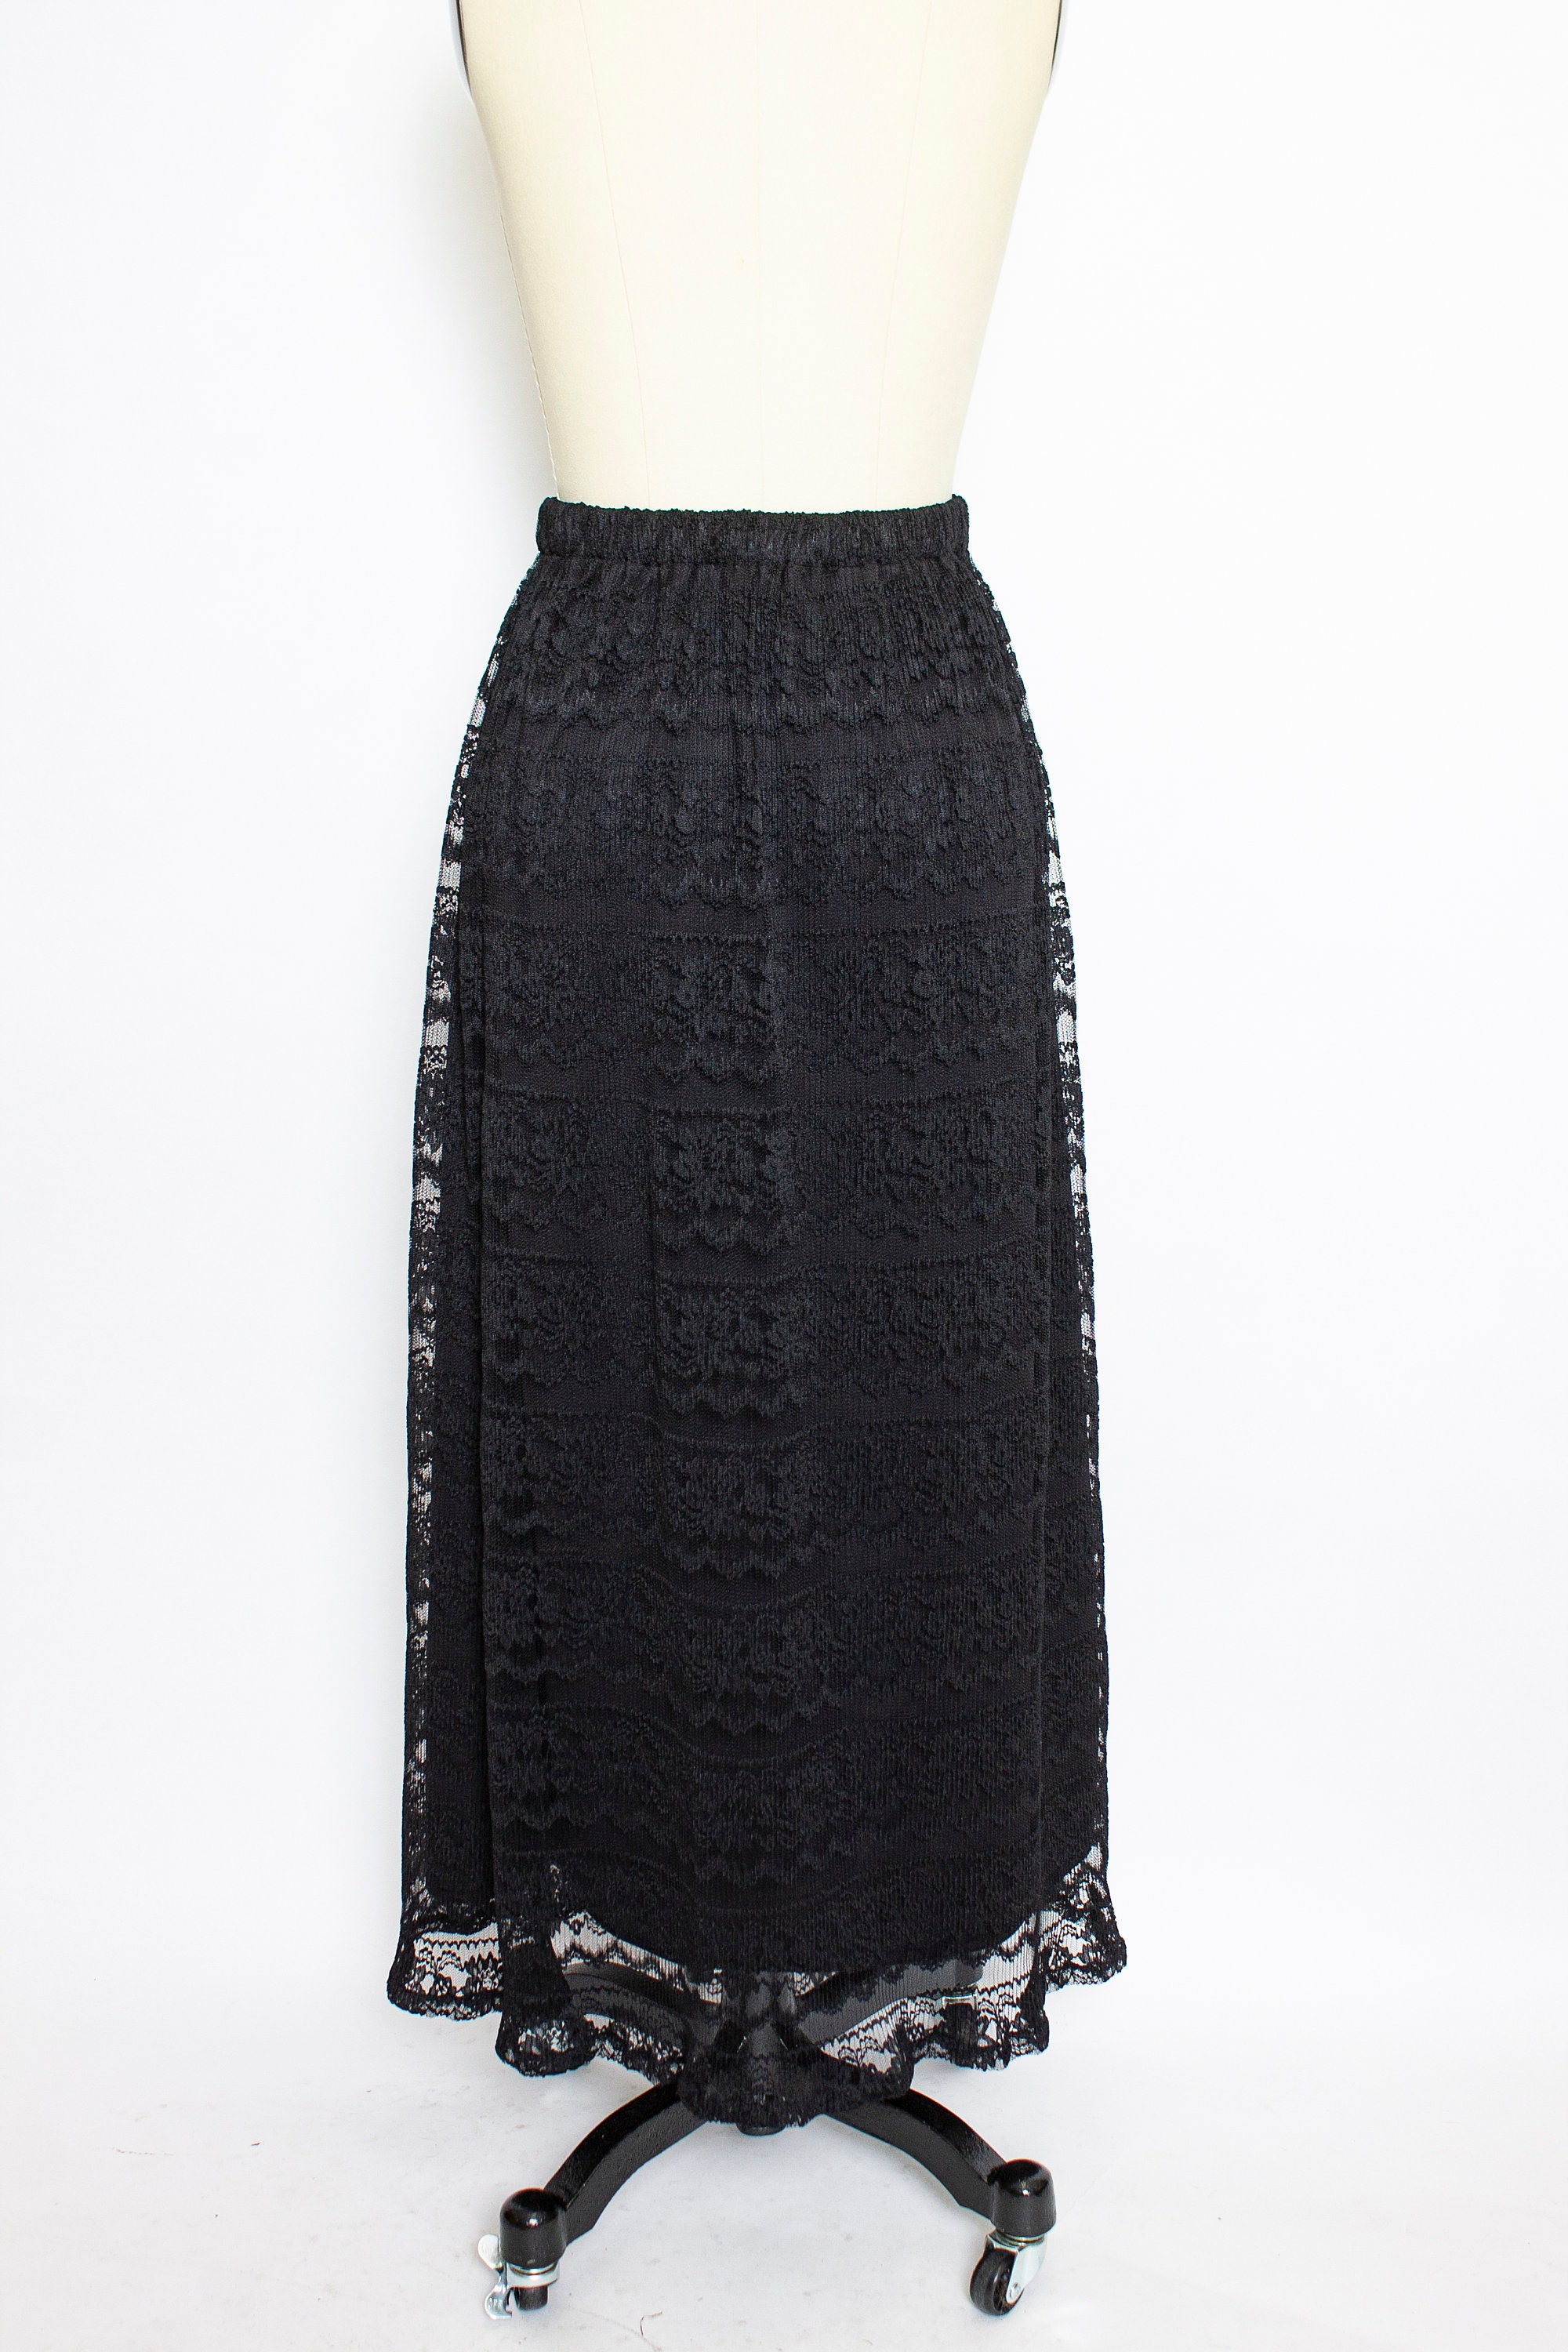 1980s VICTOR COSTA Skirt Black Lace Full S - Etsy